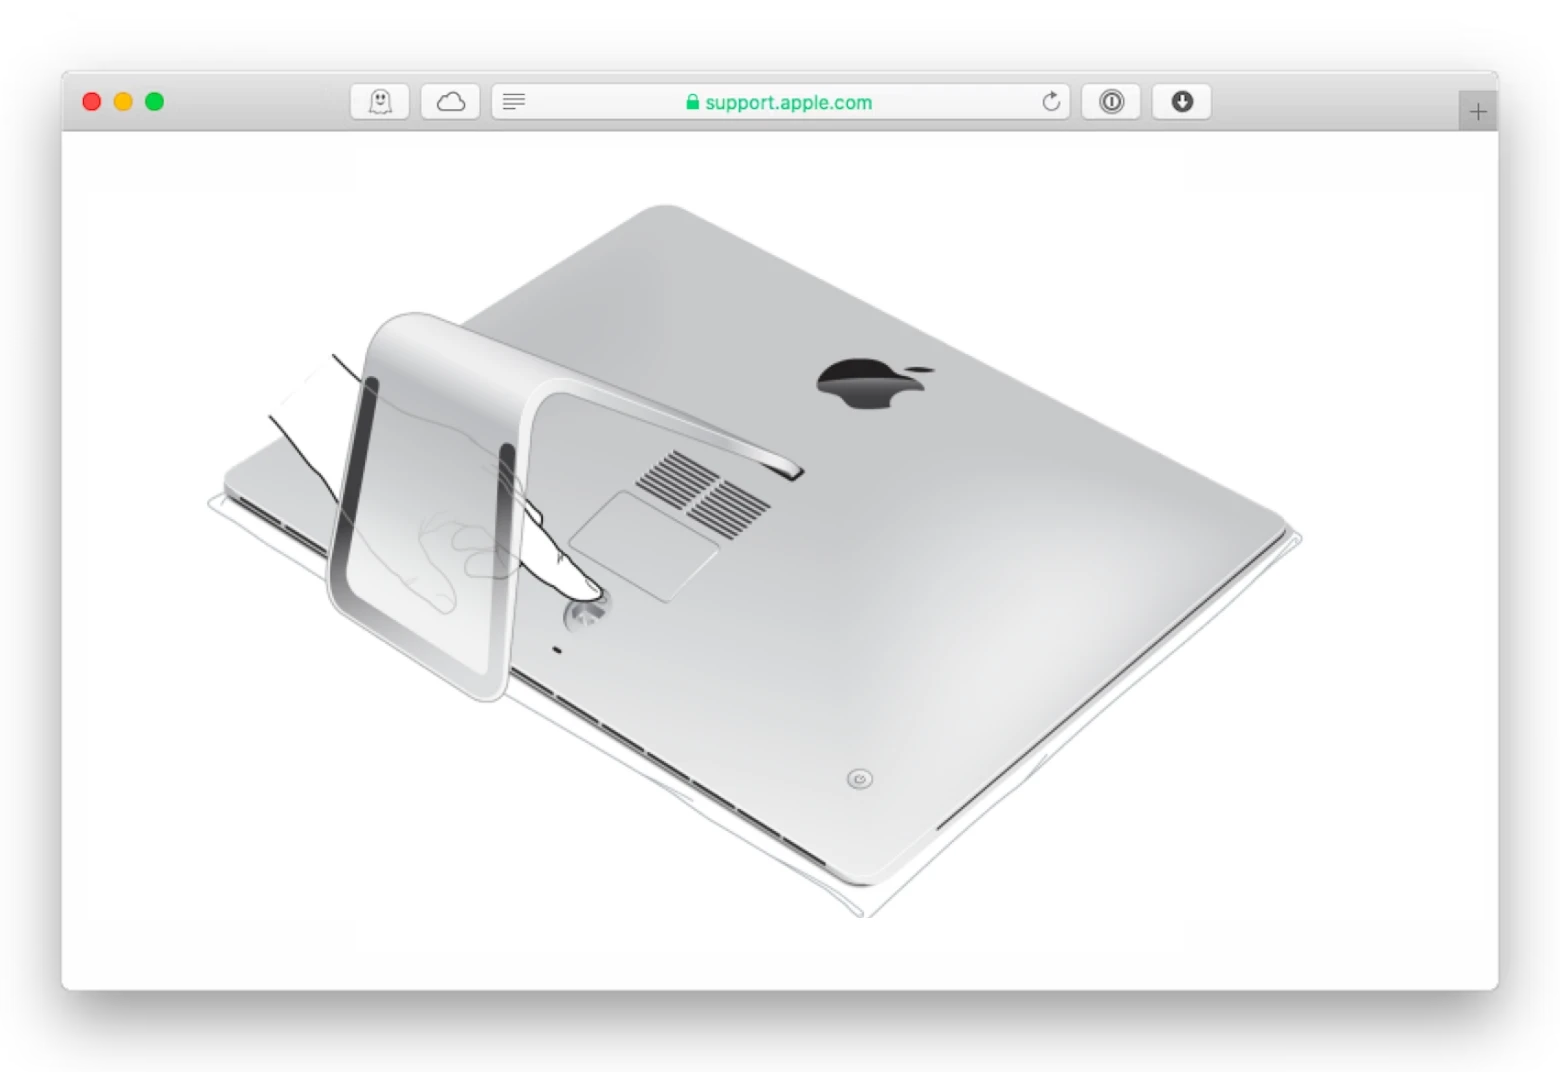 open iMac | Source: apple.com